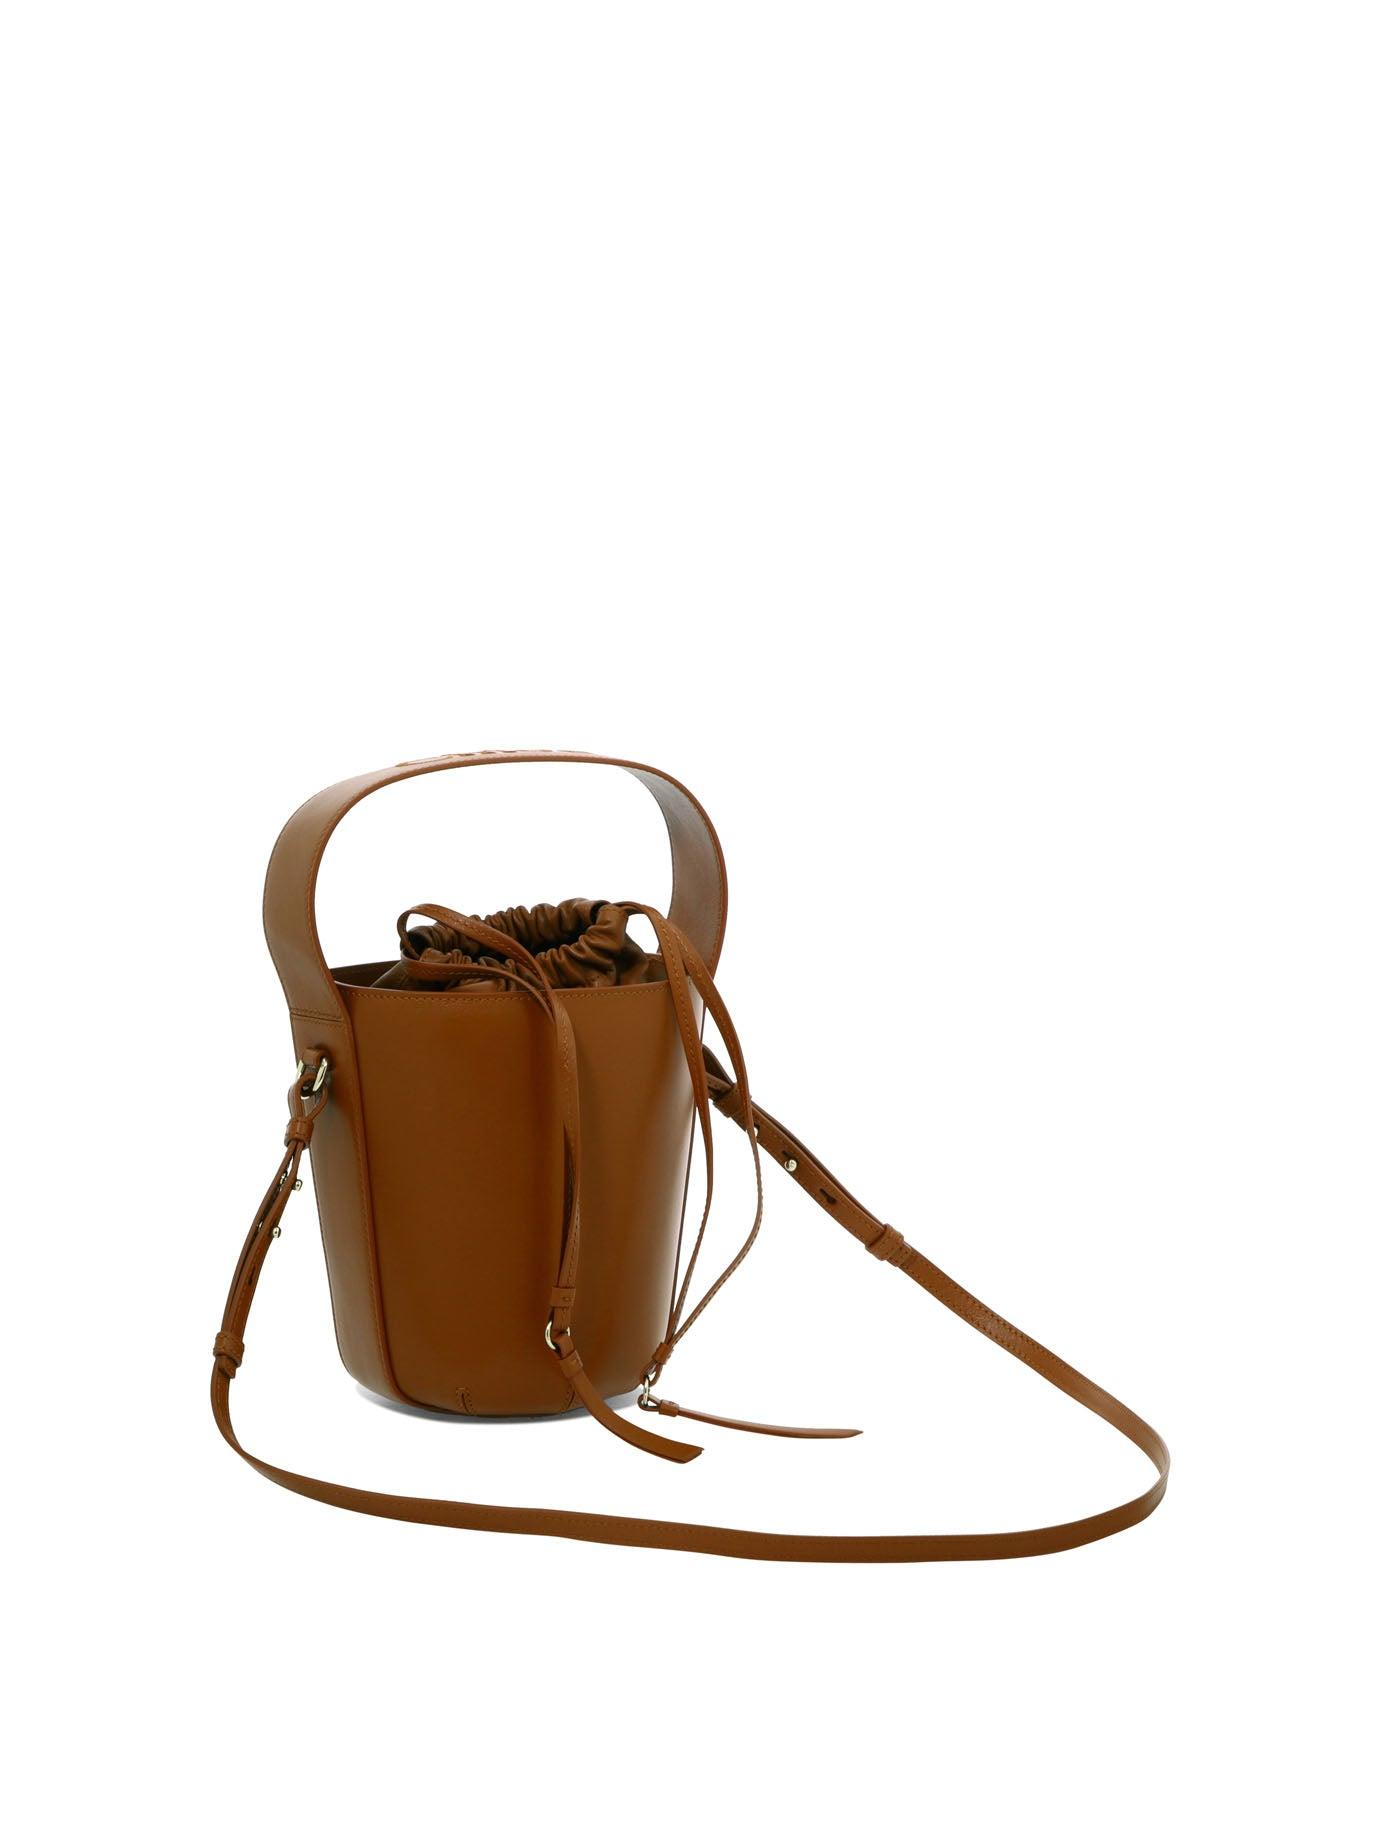 Sense Small Leather Bucket Bag in Beige - Chloe